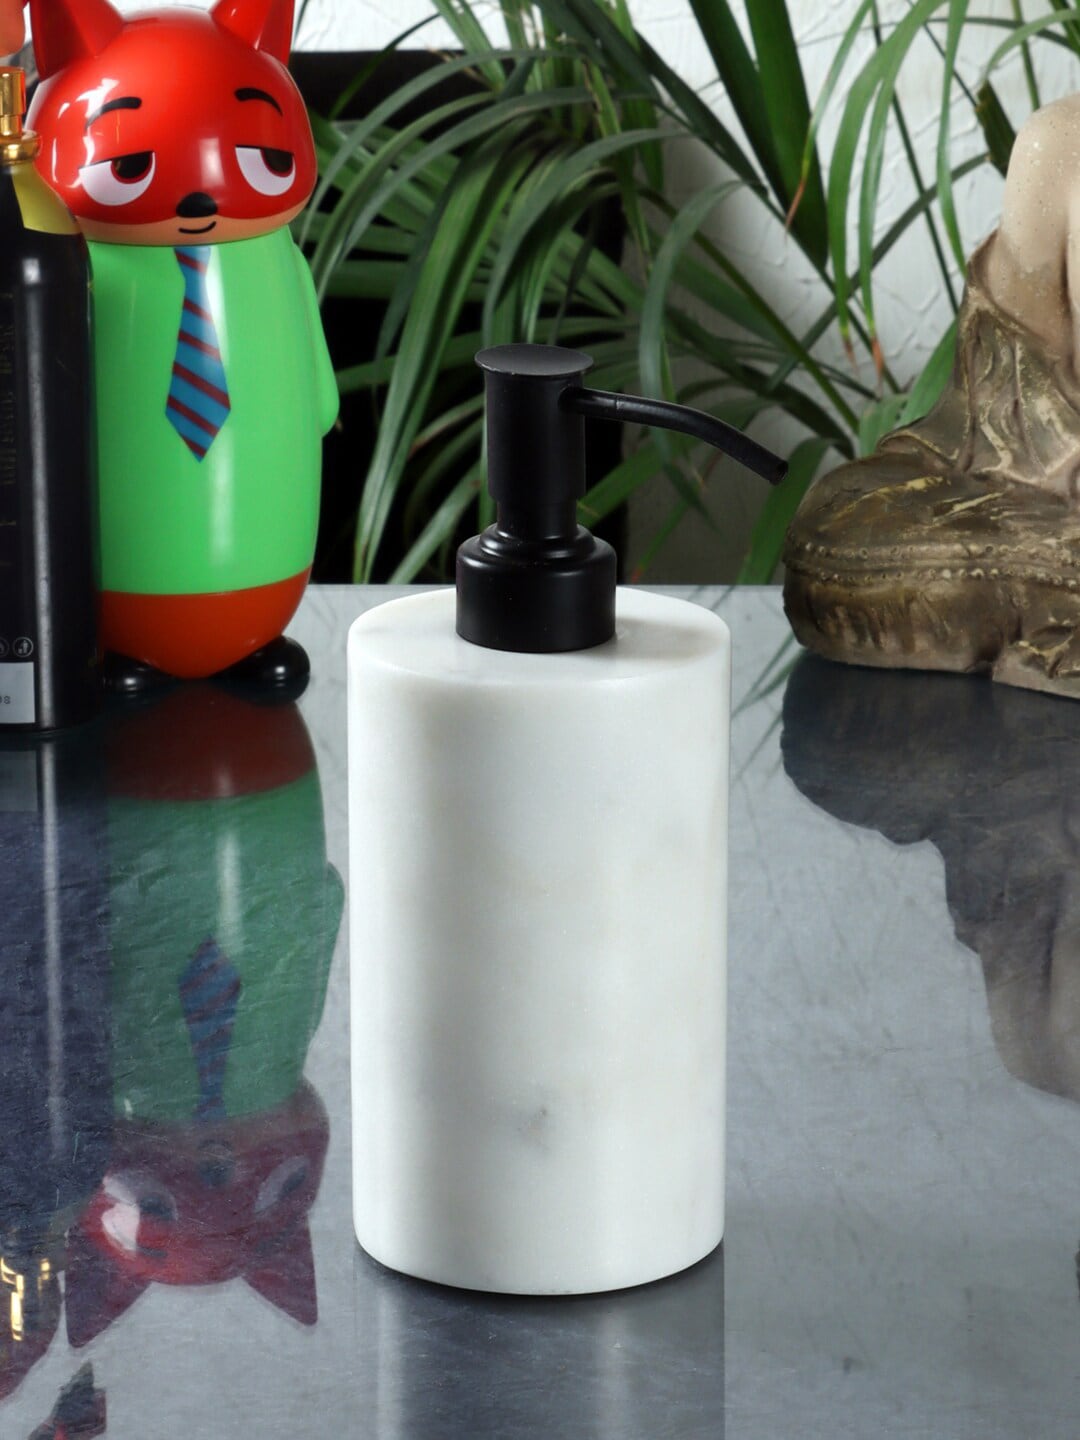 NikkisPride White & Black Solid Marble Soap Dispenser Price in India